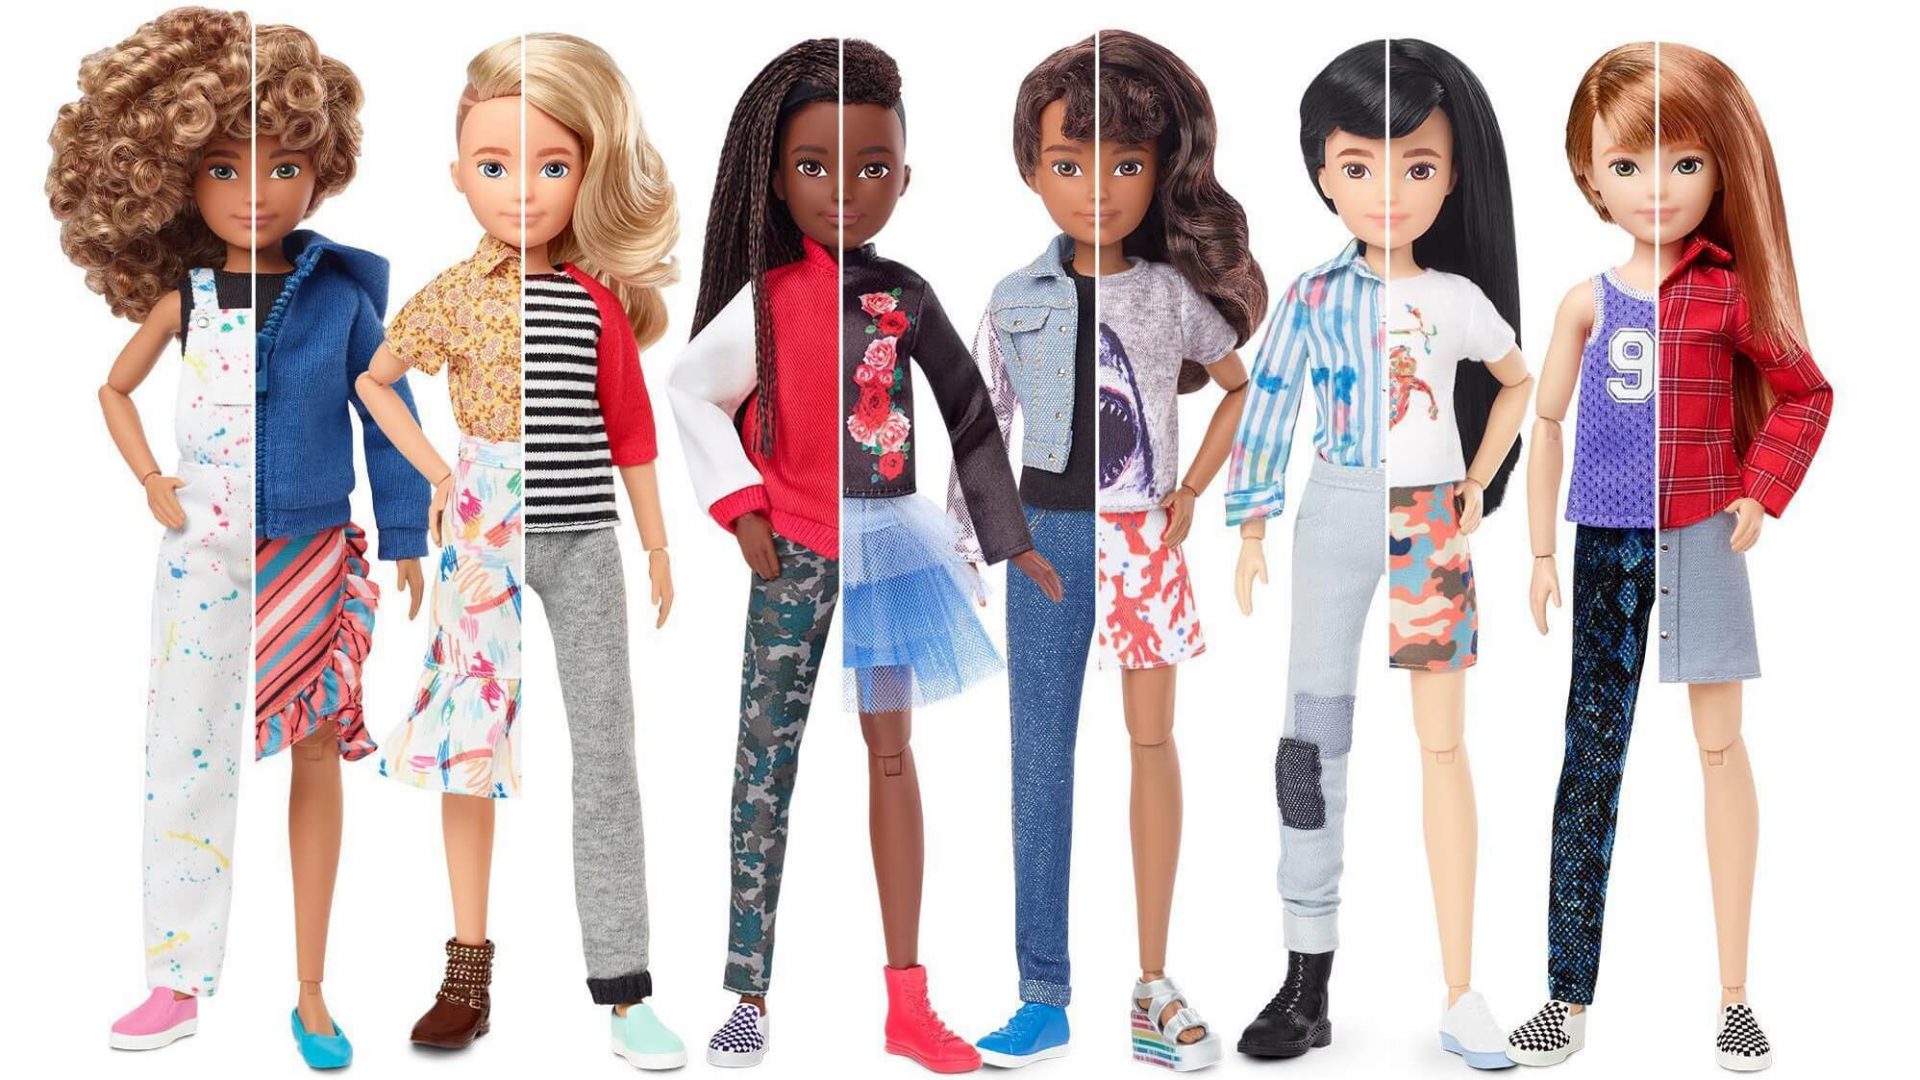 Gender neutral toys: 6 progressive brands